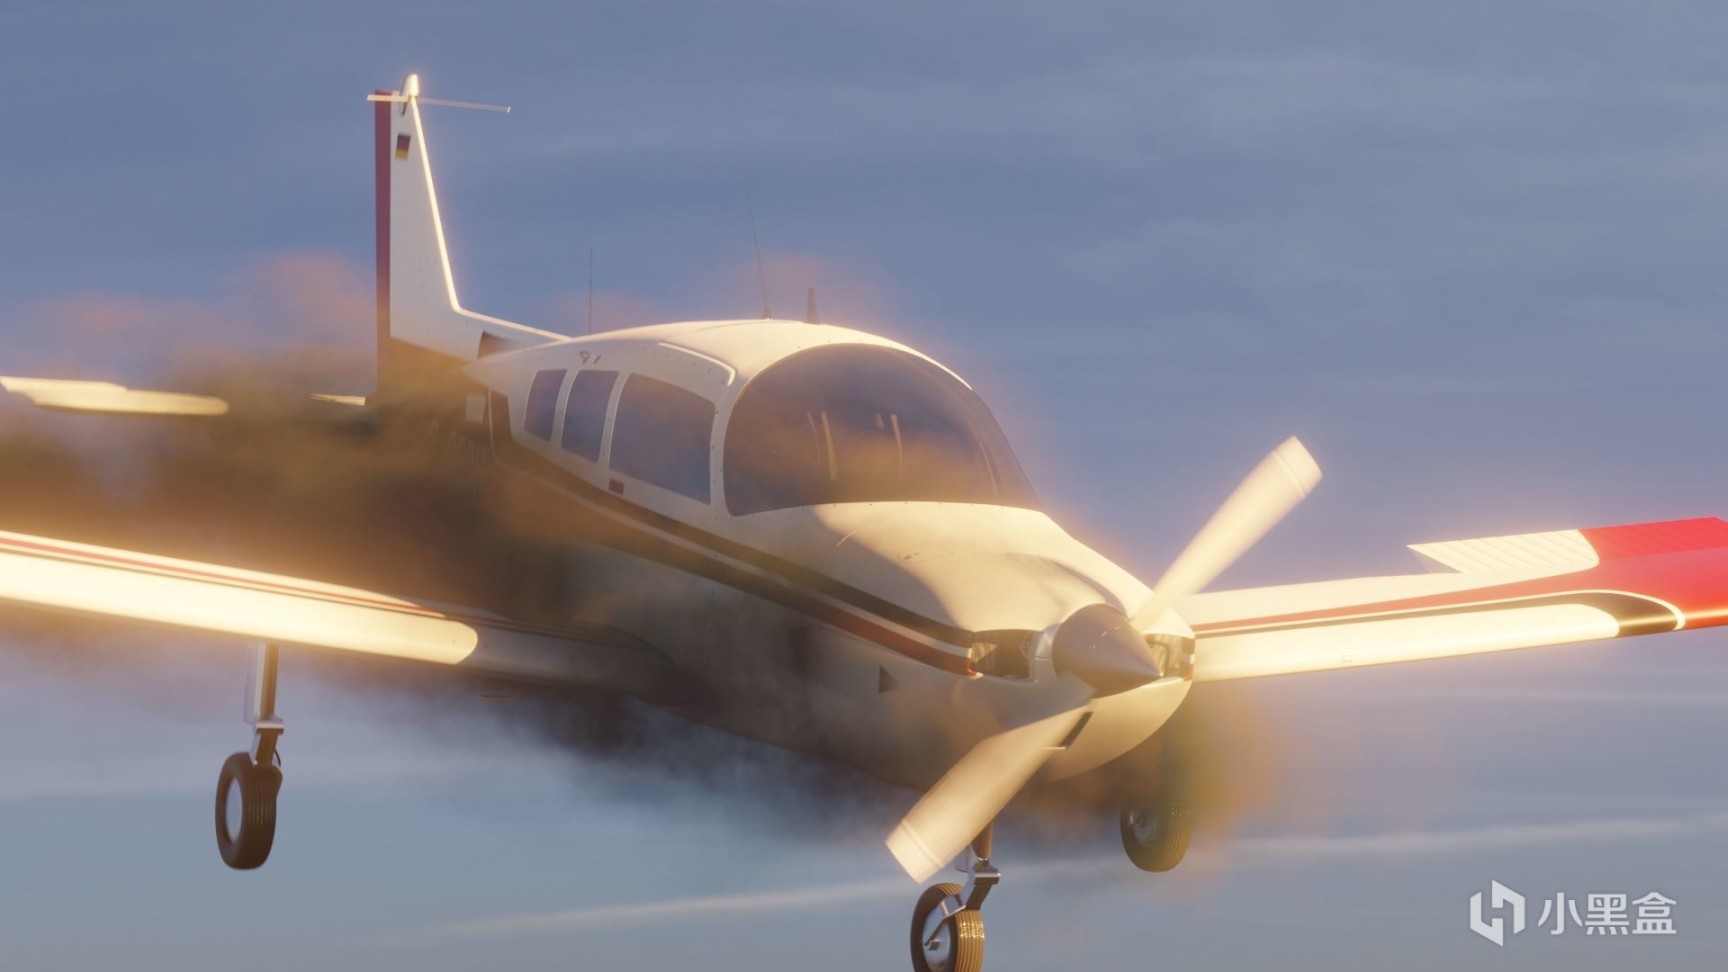 【PC游戏】心跳游戏HBG推出模拟游戏新作《飞机失事模拟器》